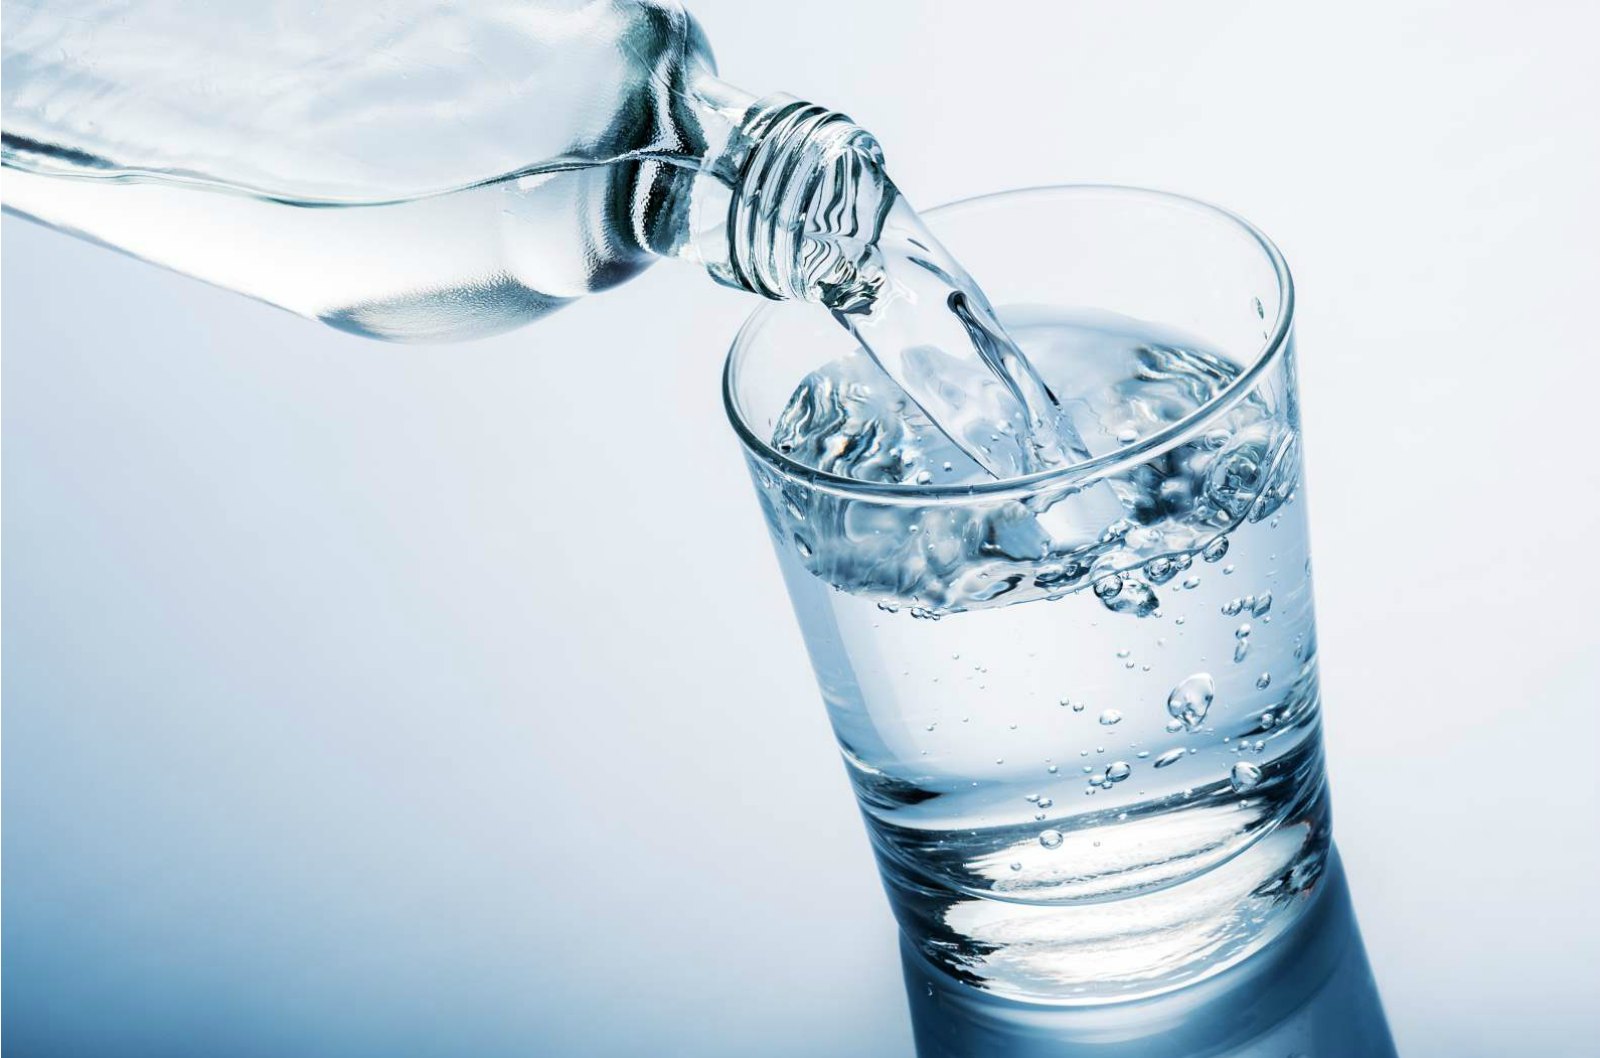 University of Delaware Technology Provides Safer Drinking Water